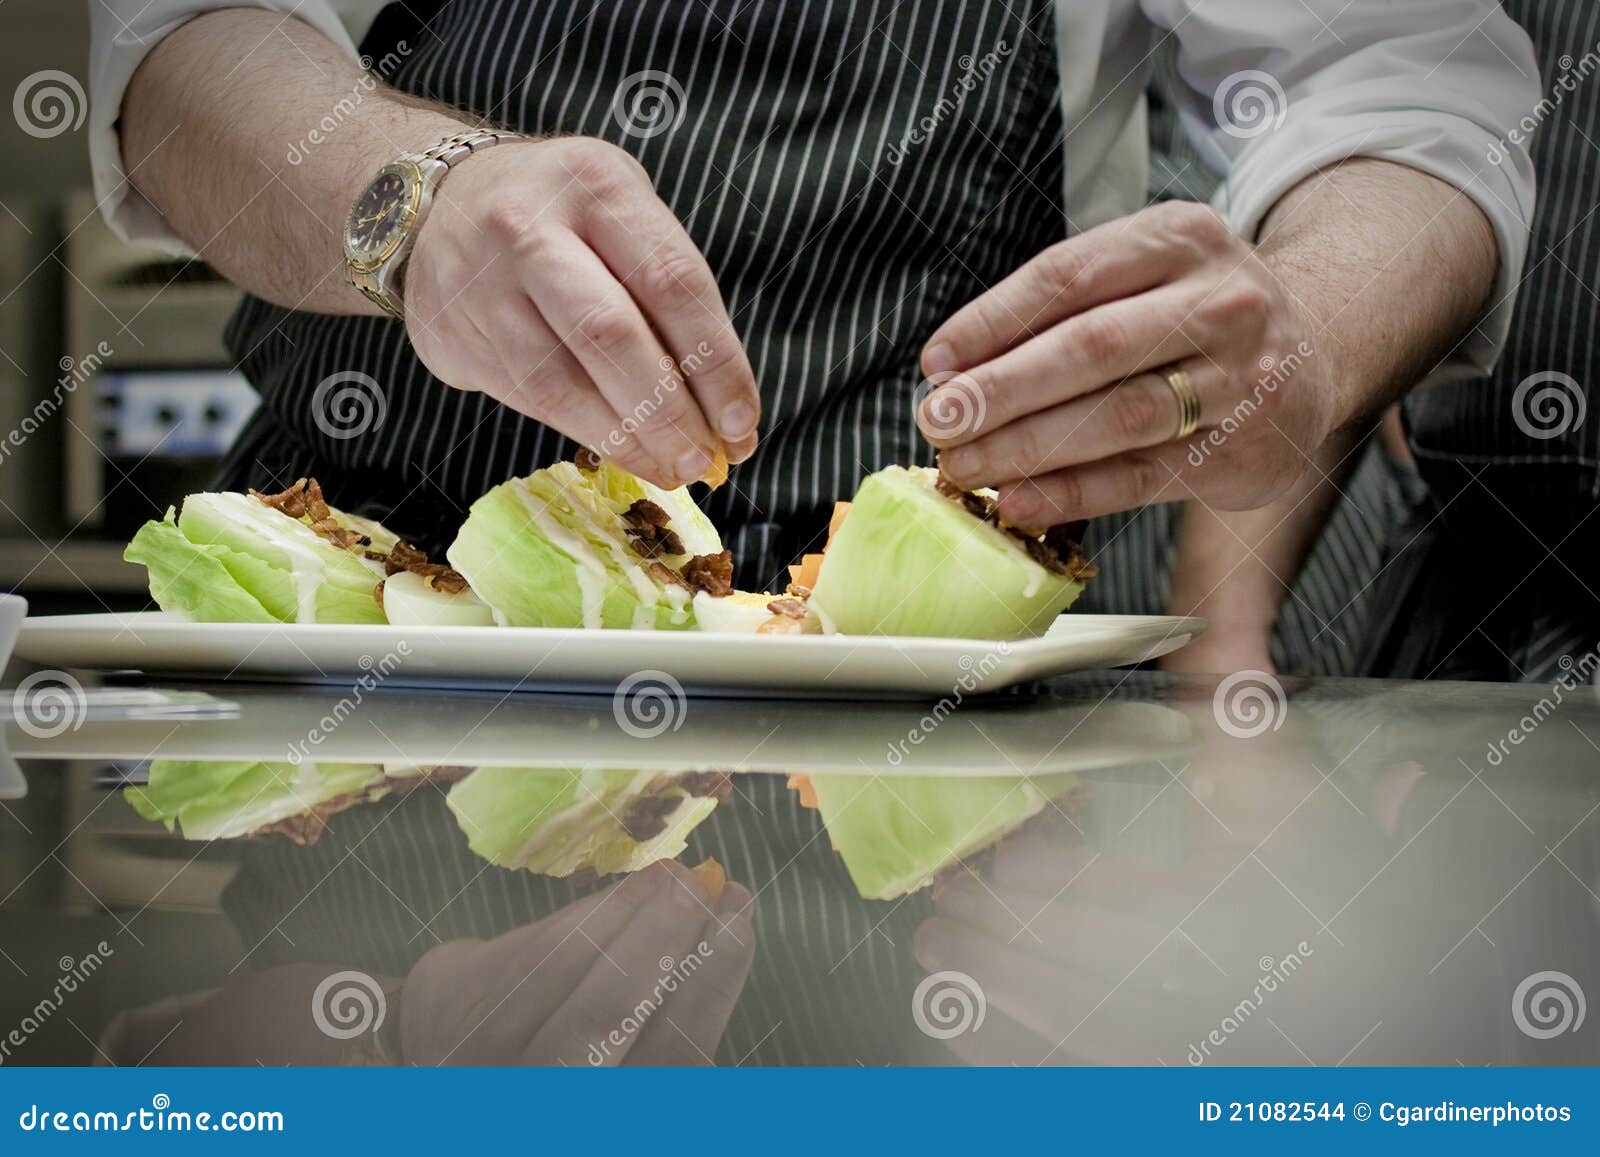 Chef Preparing Salad. An image of a professional restaurant chef preparing a salad plate.